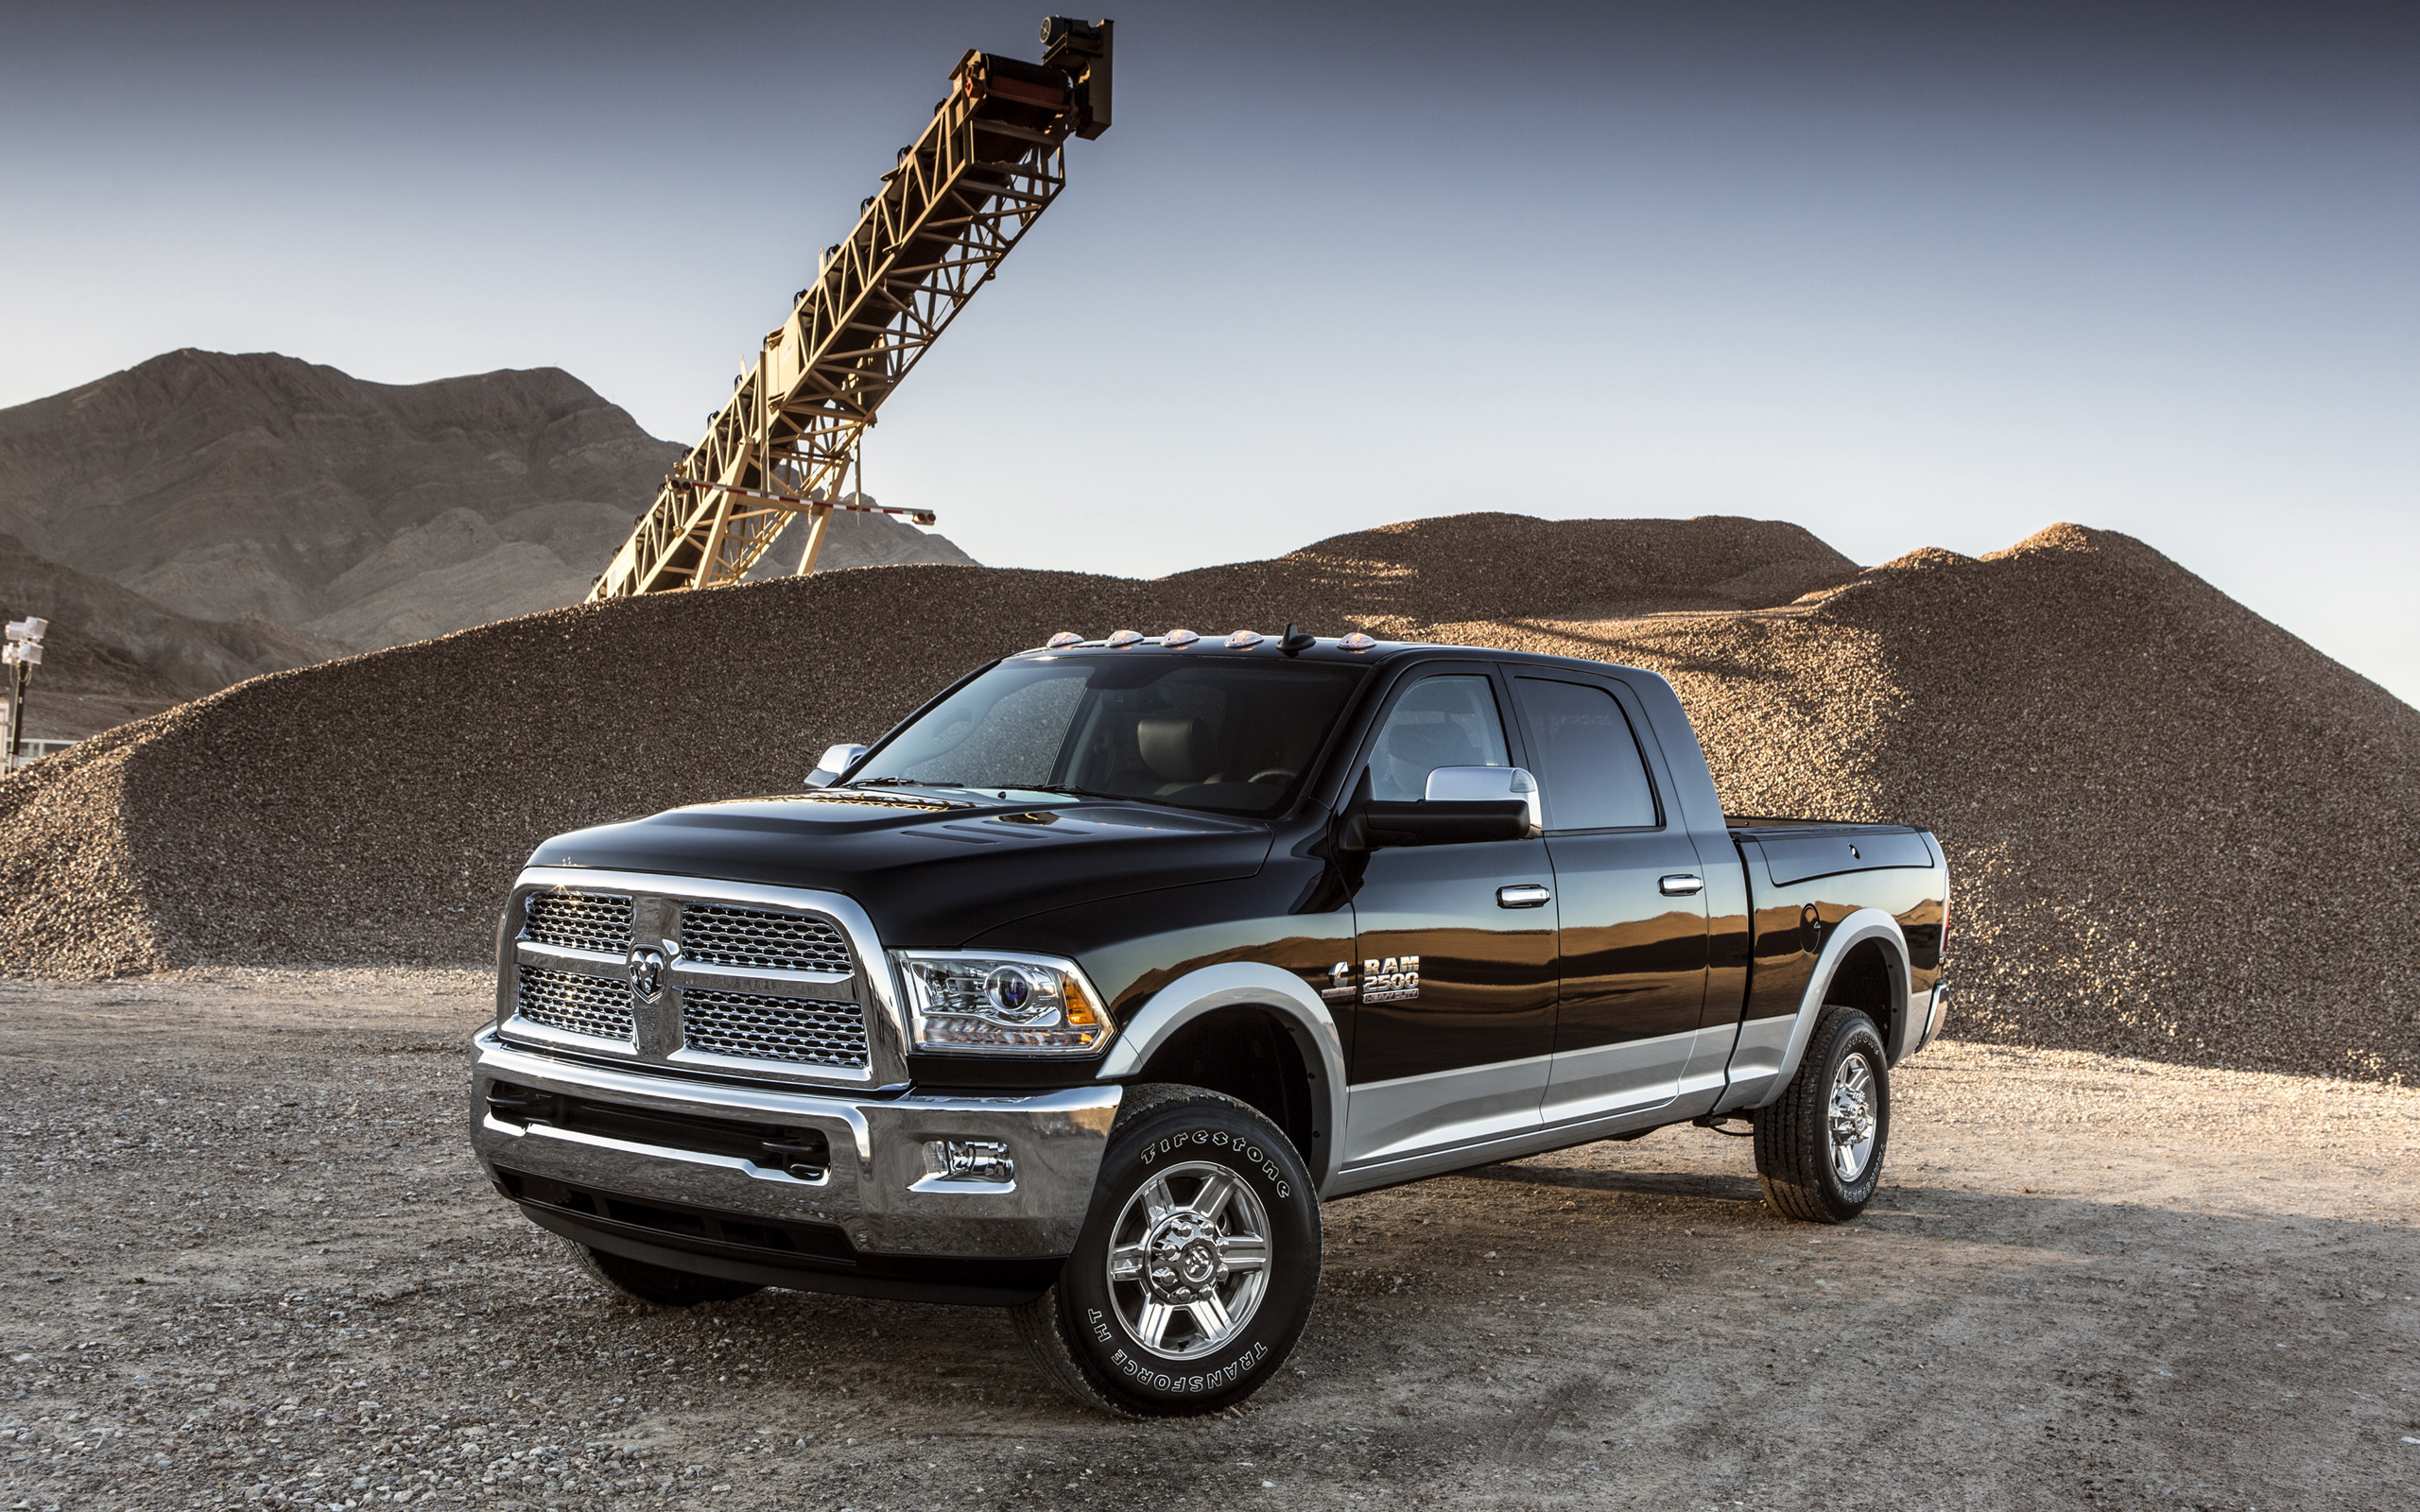 2013, Dodge, Ram, 2500, 4x4, Truck Wallpaper